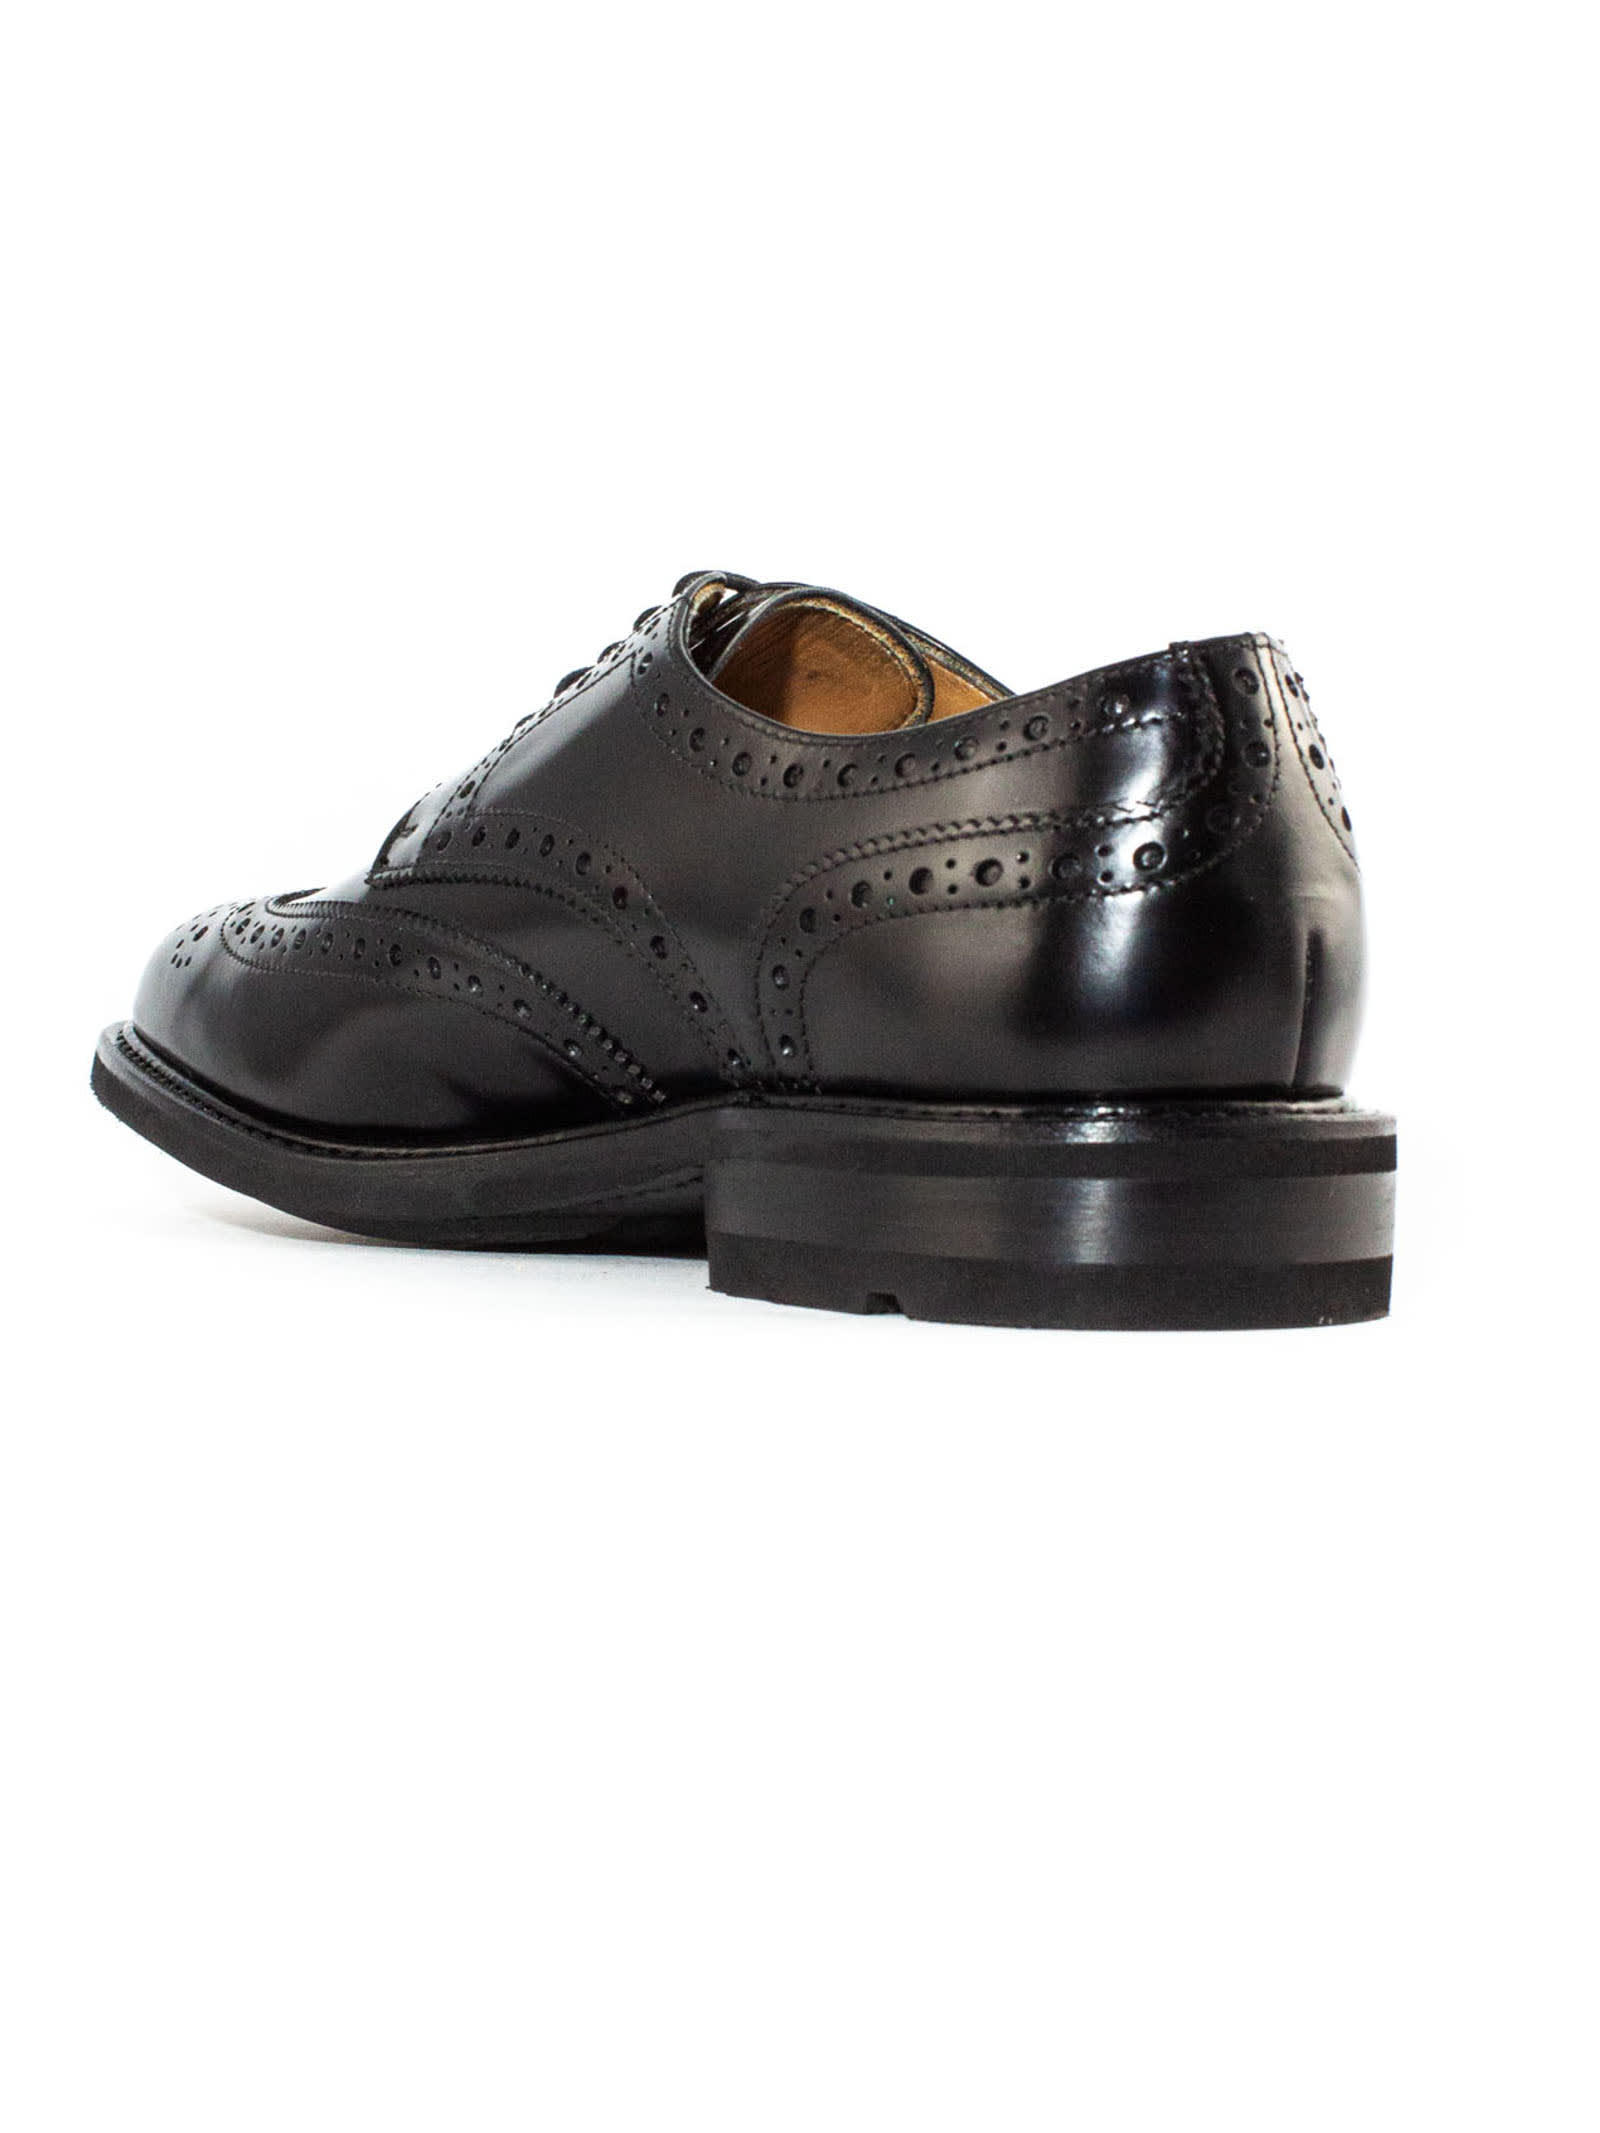 Shop Berwick 1707 Black Shiny Leather Derby Shoes